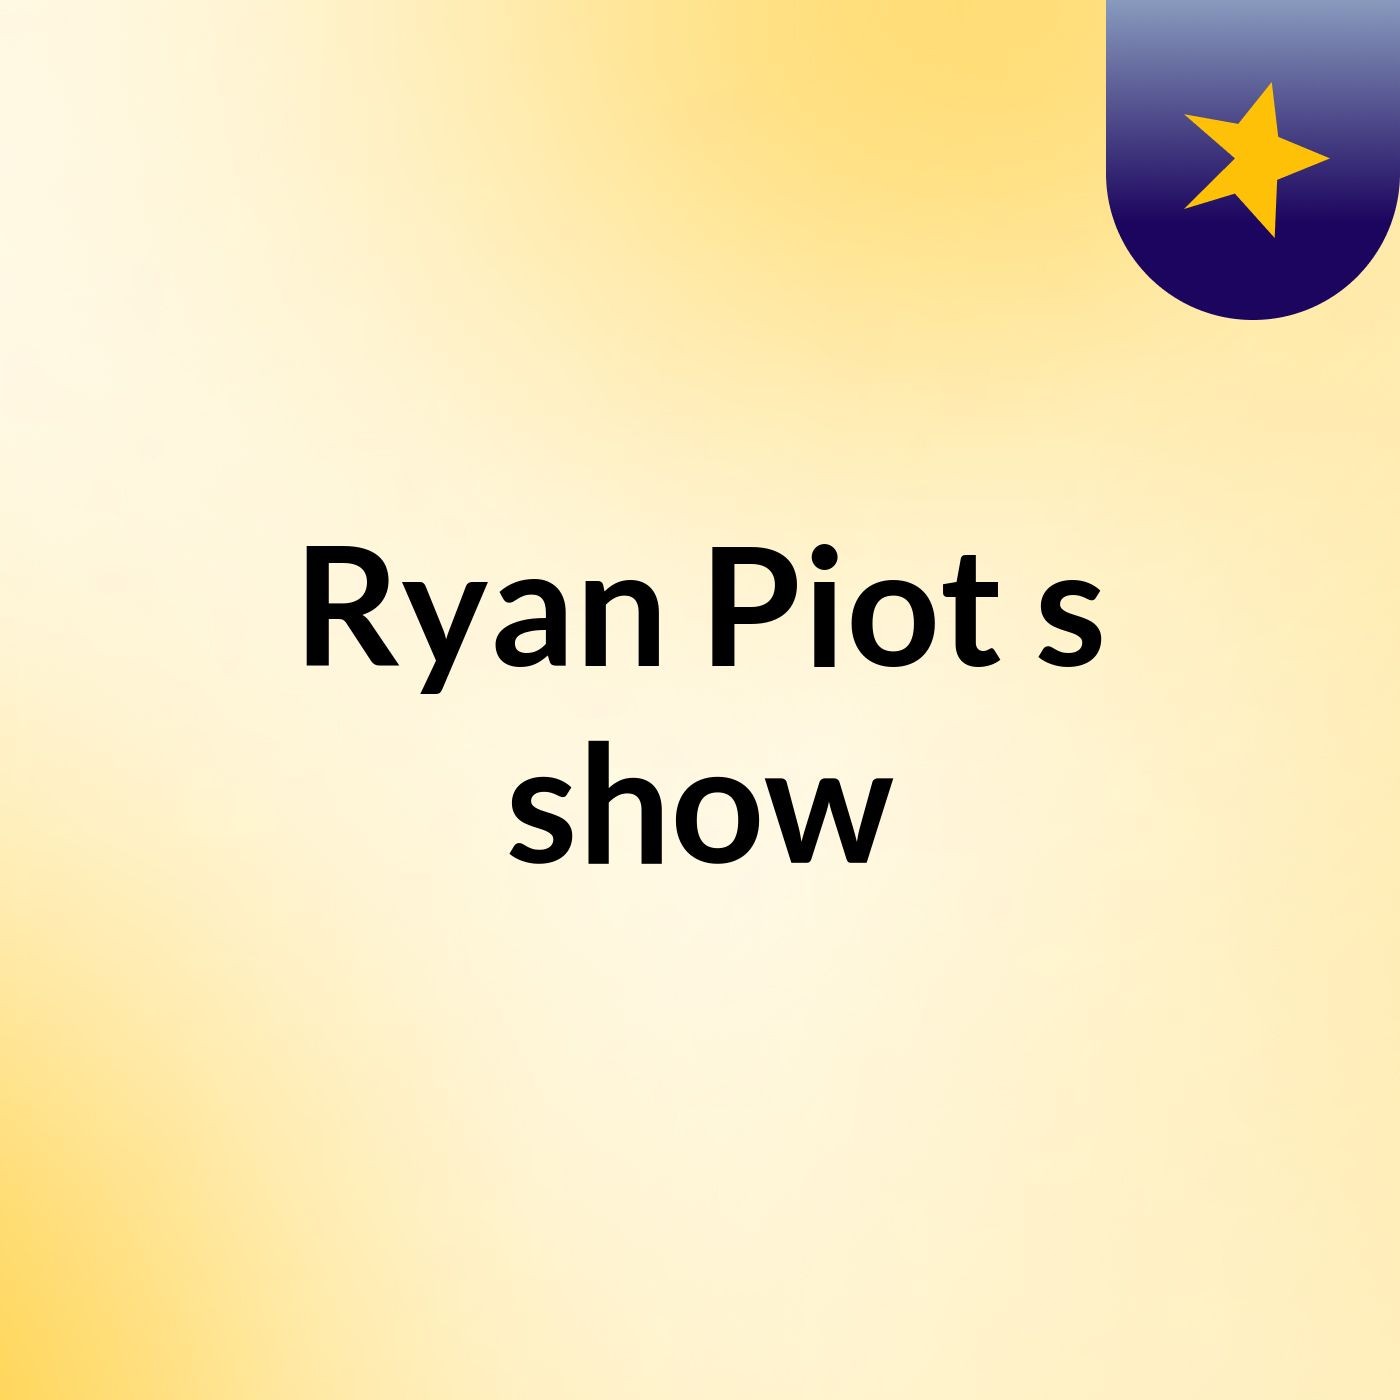 Ryan Piot's show